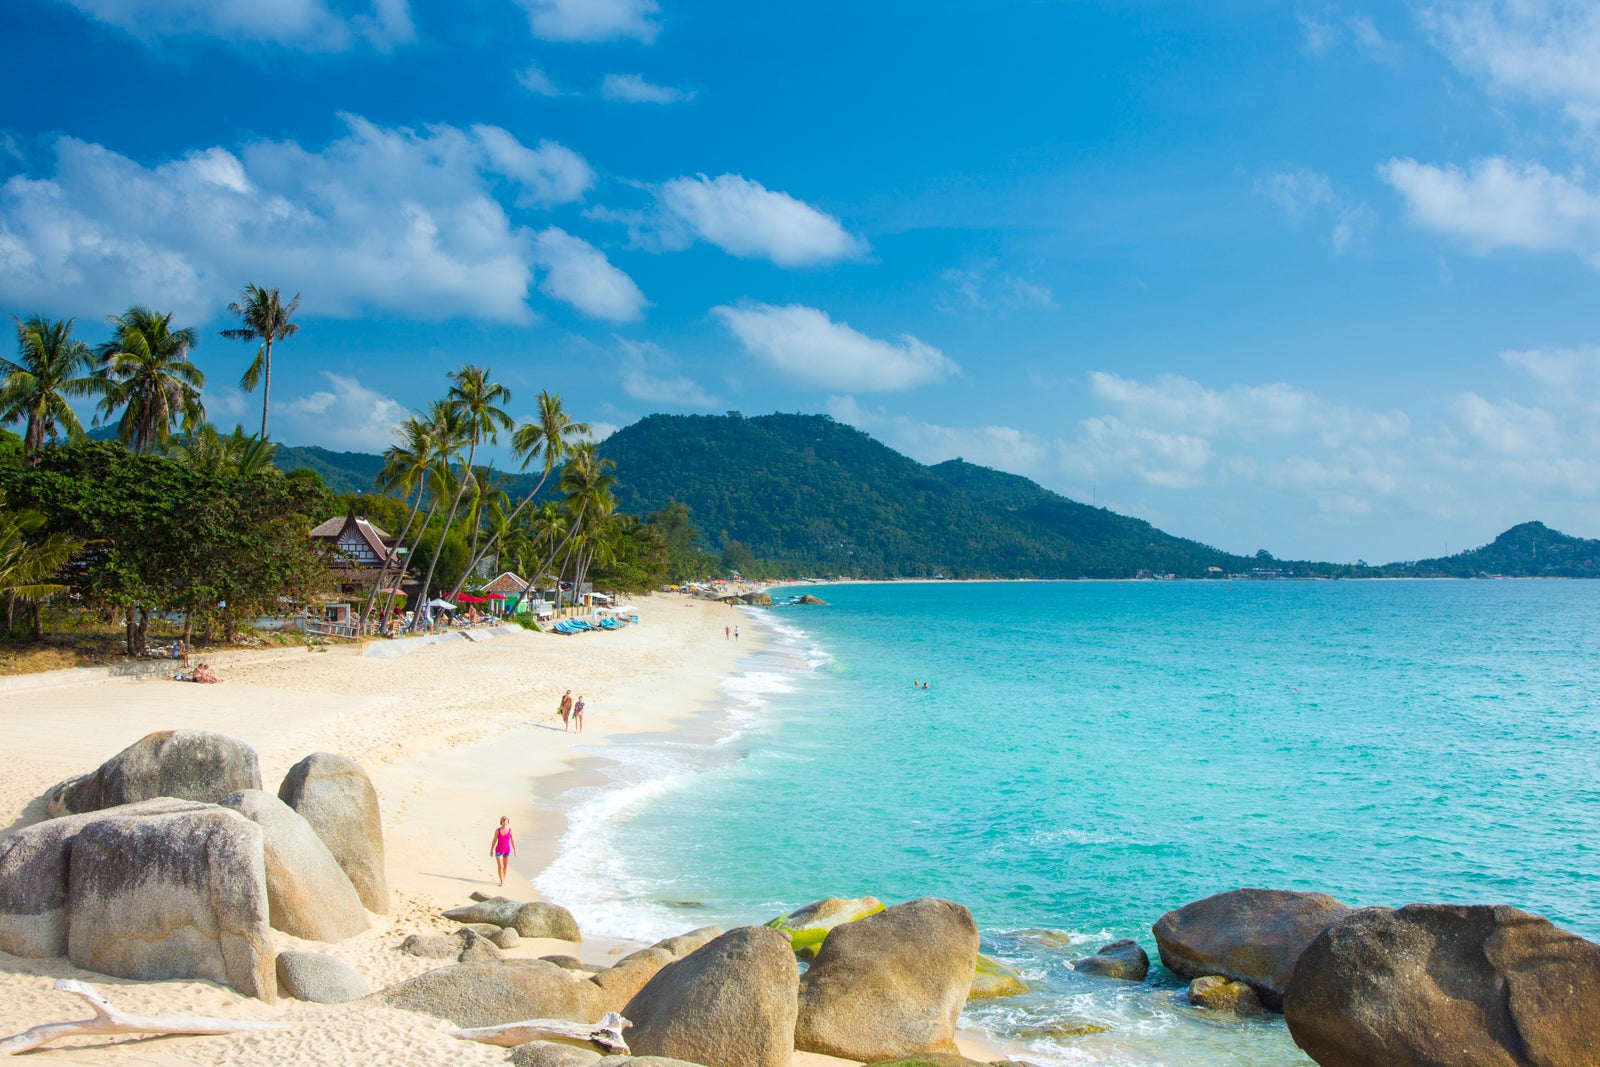 Lamai Beach in Koh Samui, Thailand